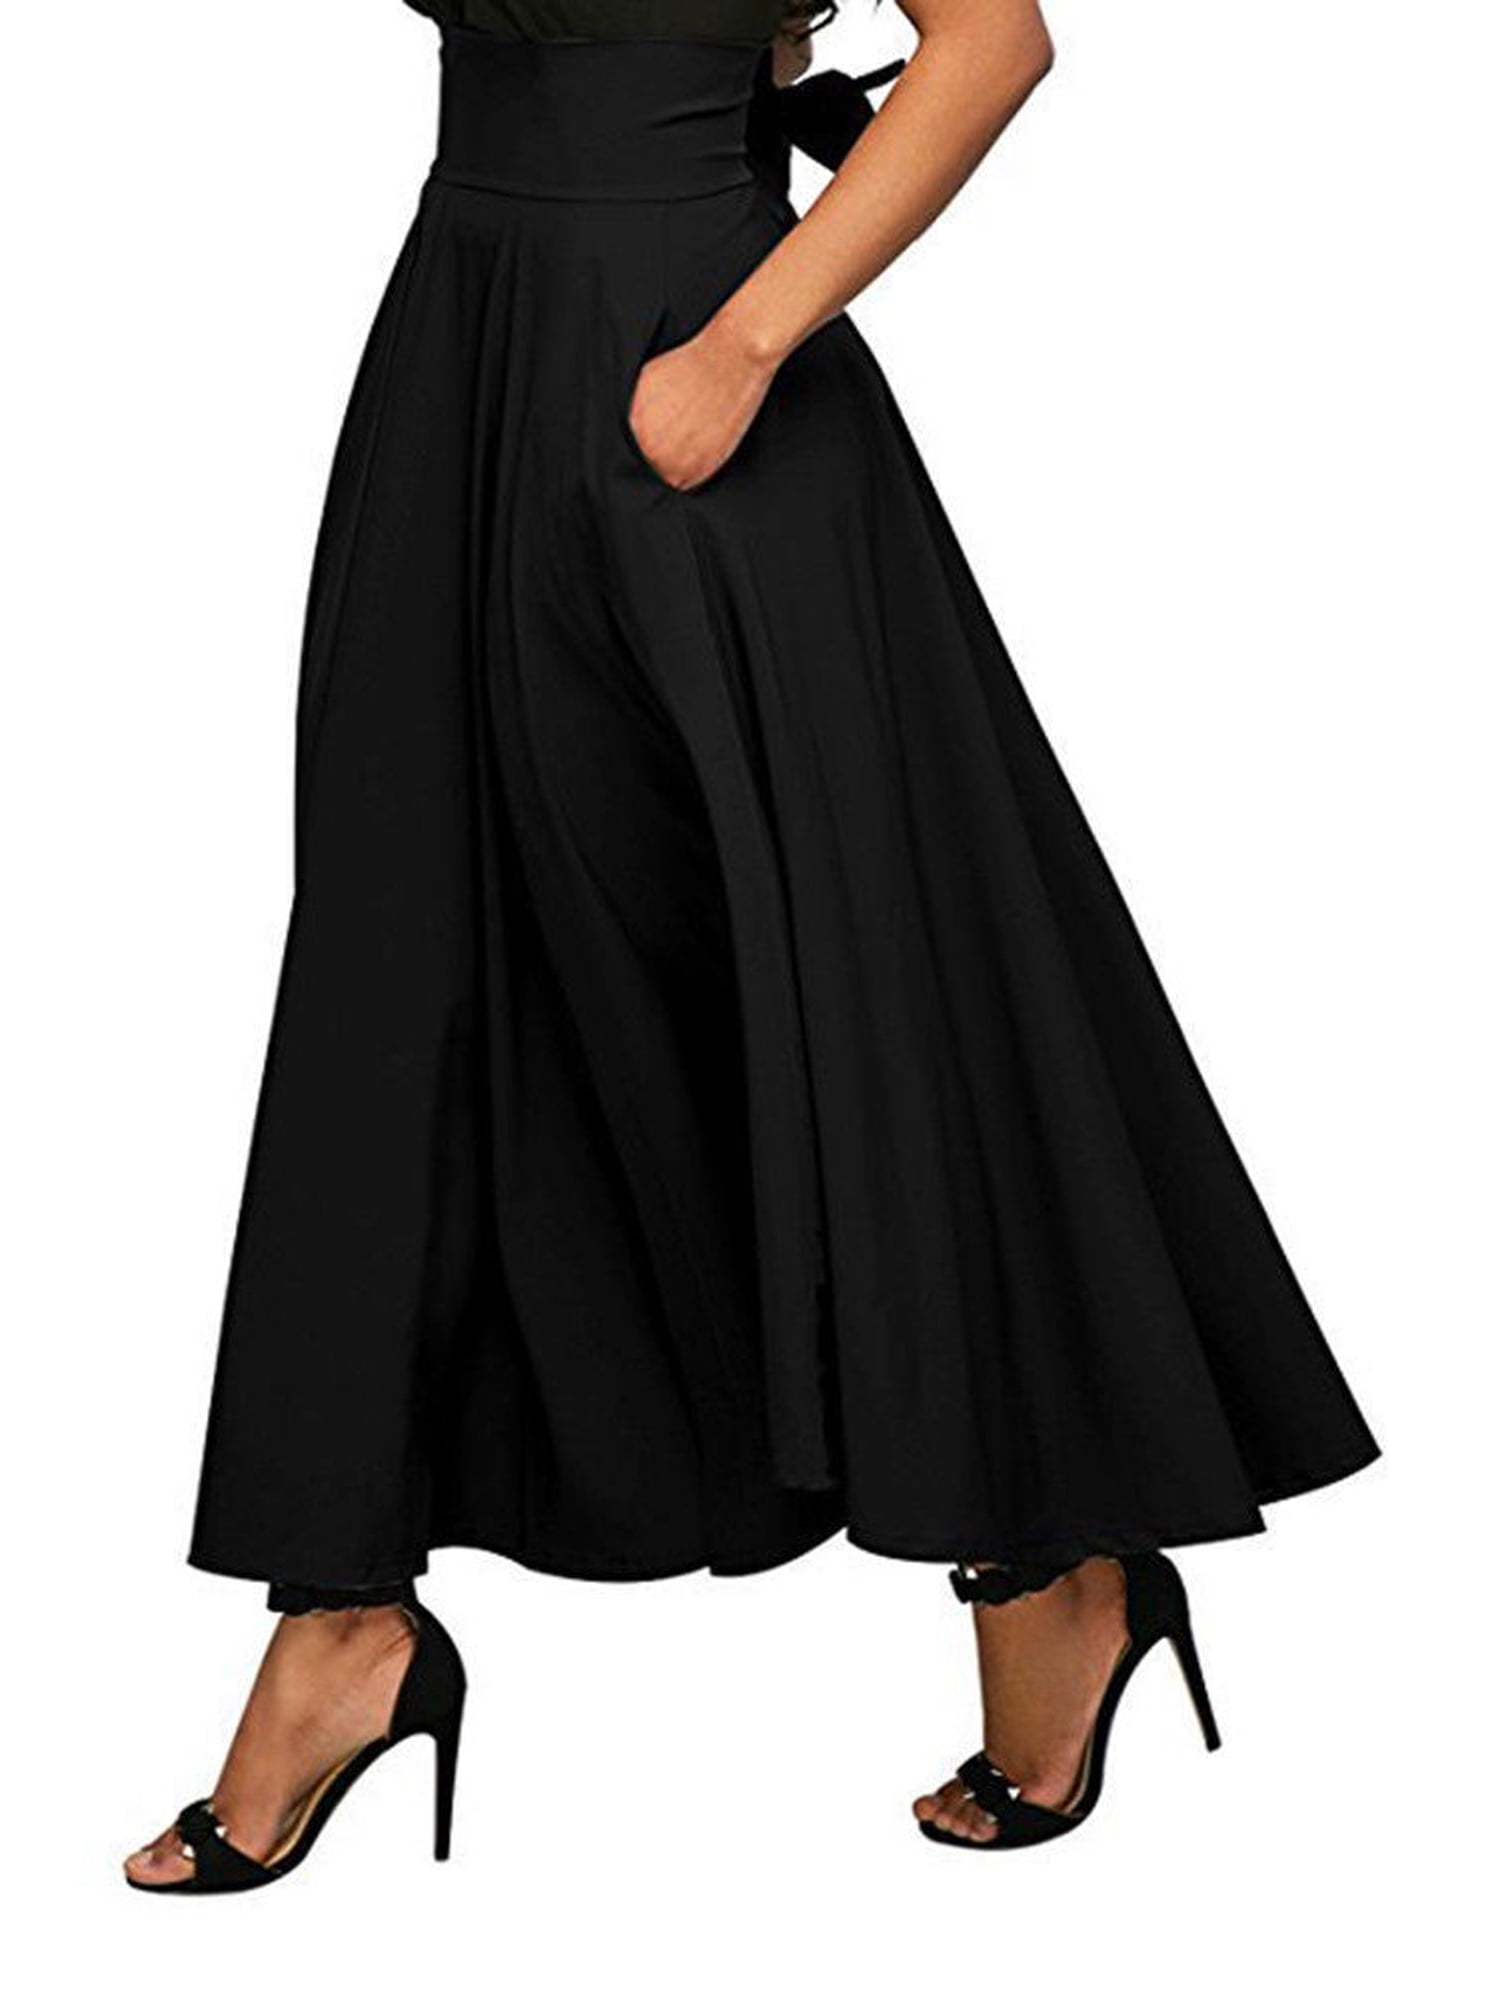 Trendy Women Summer Boho Style Chiffon Long Maxi High Waist Flare Skirt Dresses